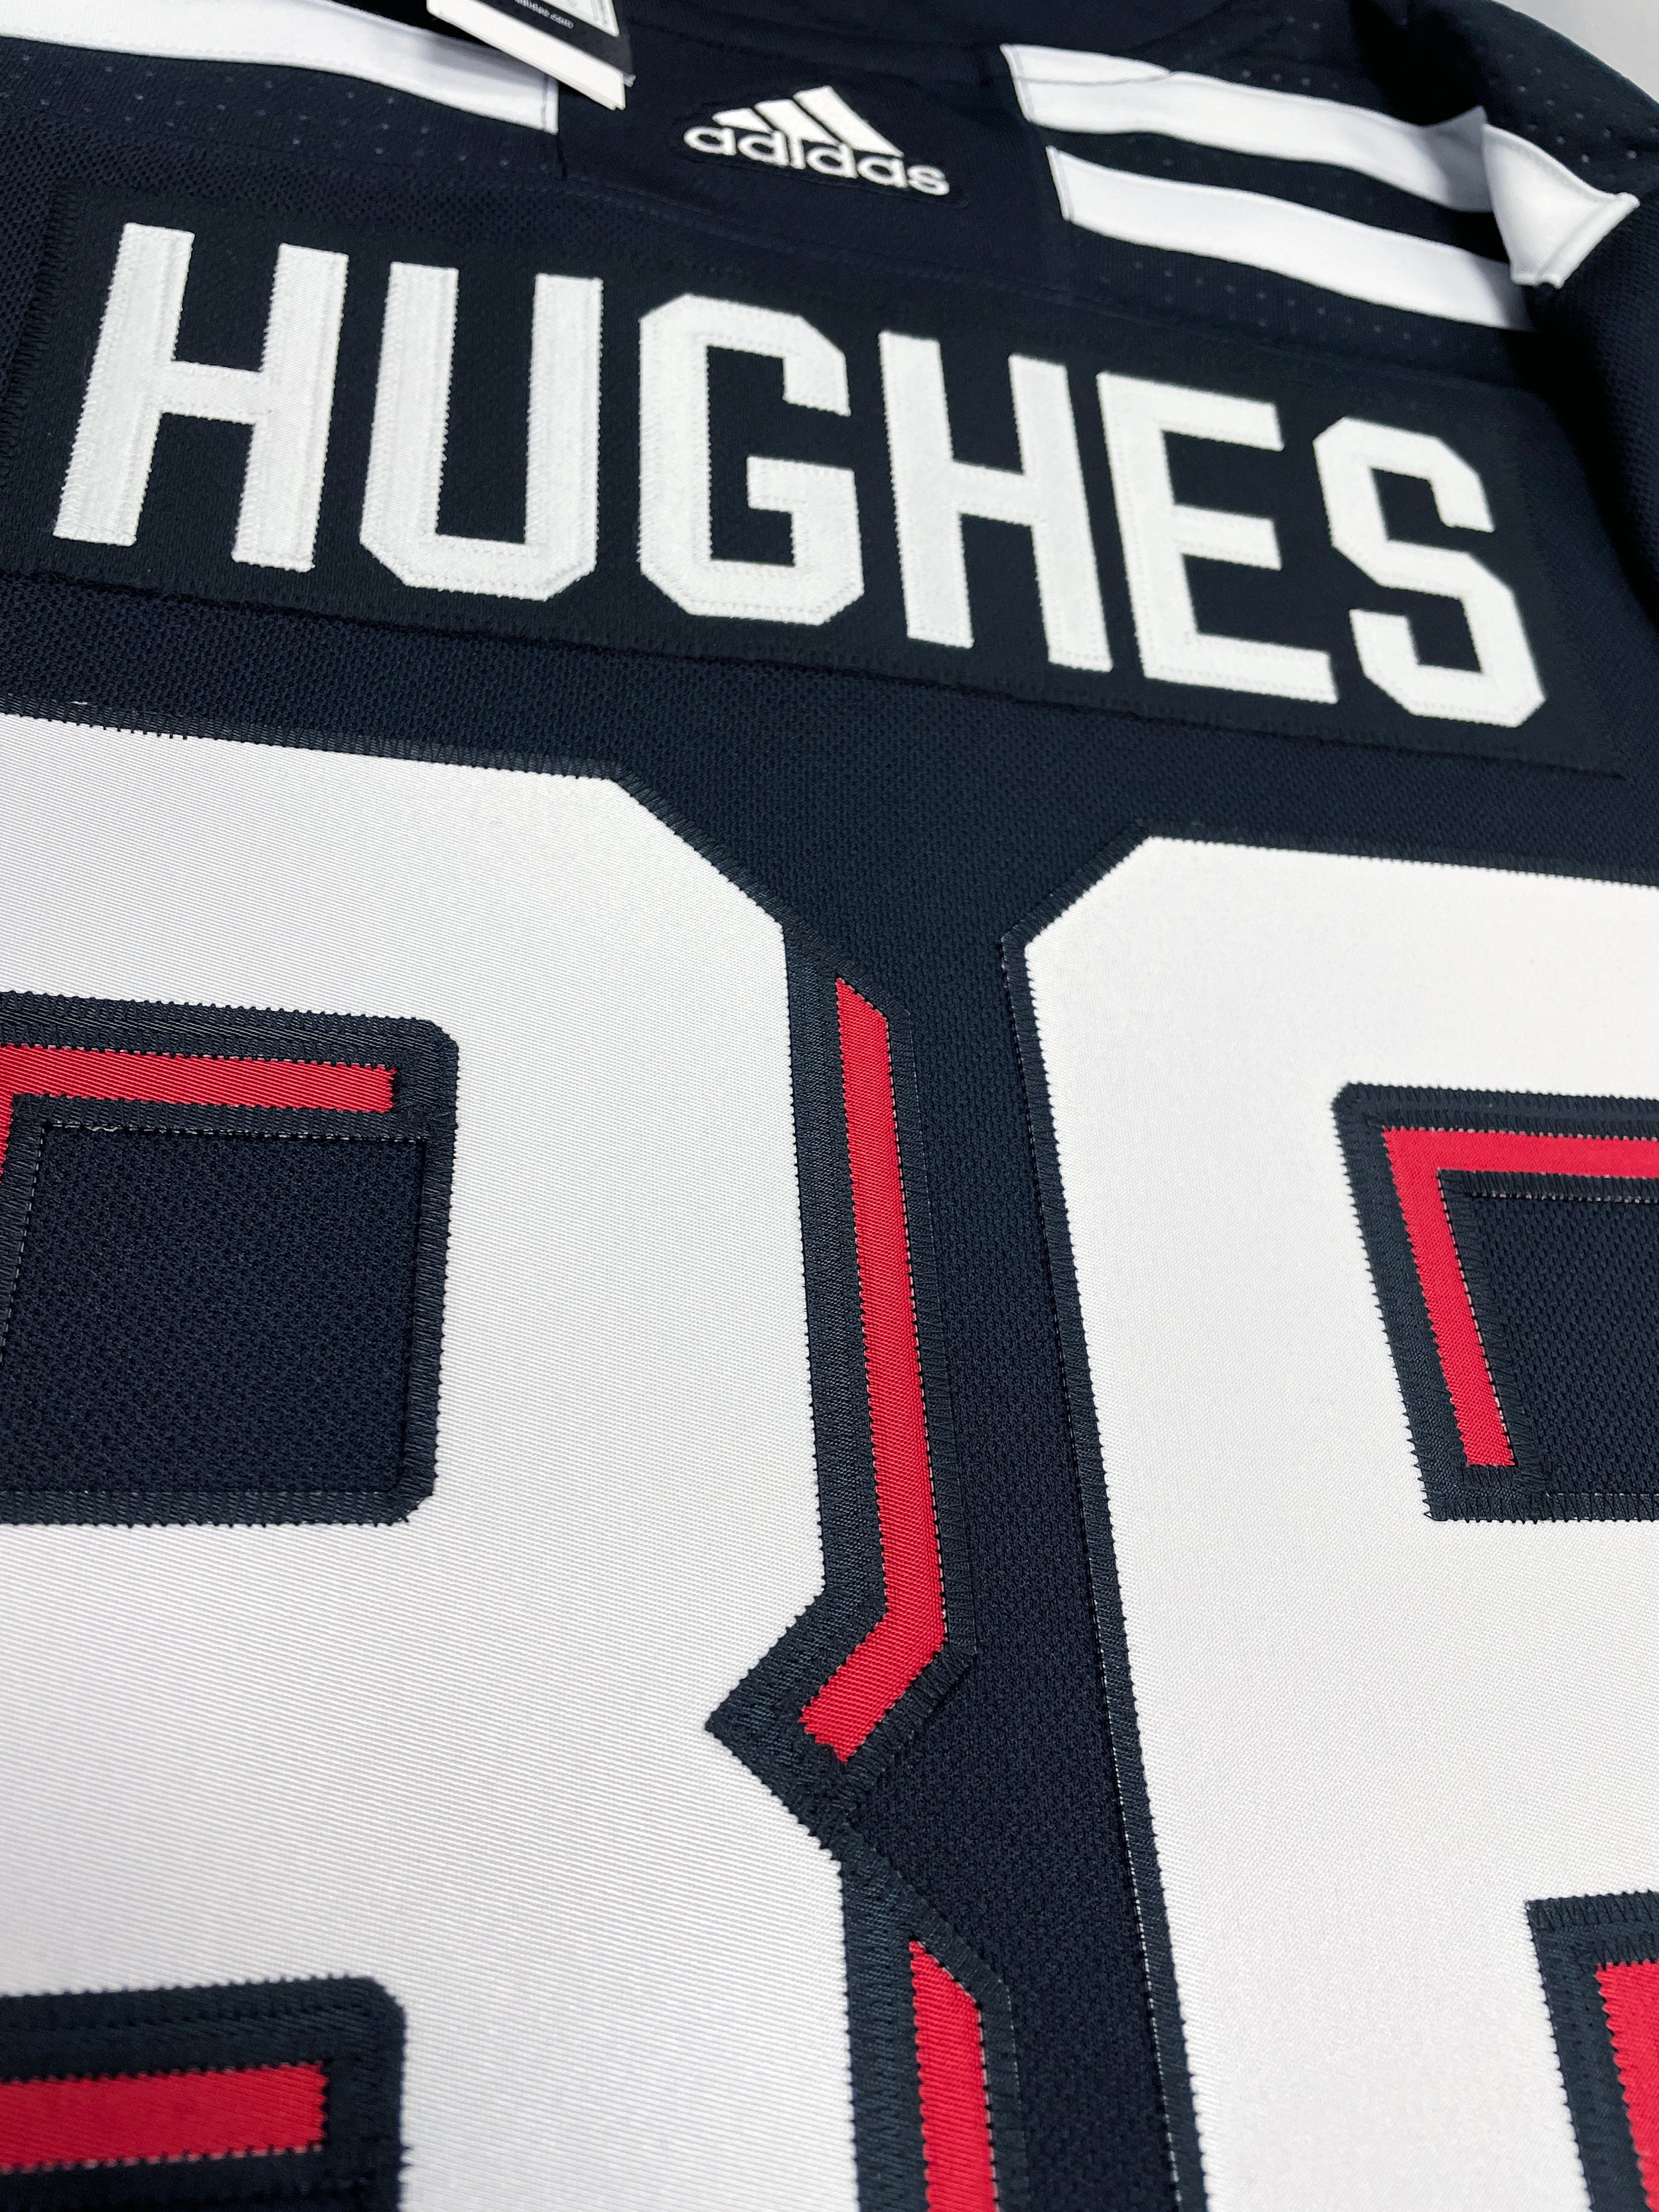 Jack Hughes Black New Jersey Devils Autographed adidas